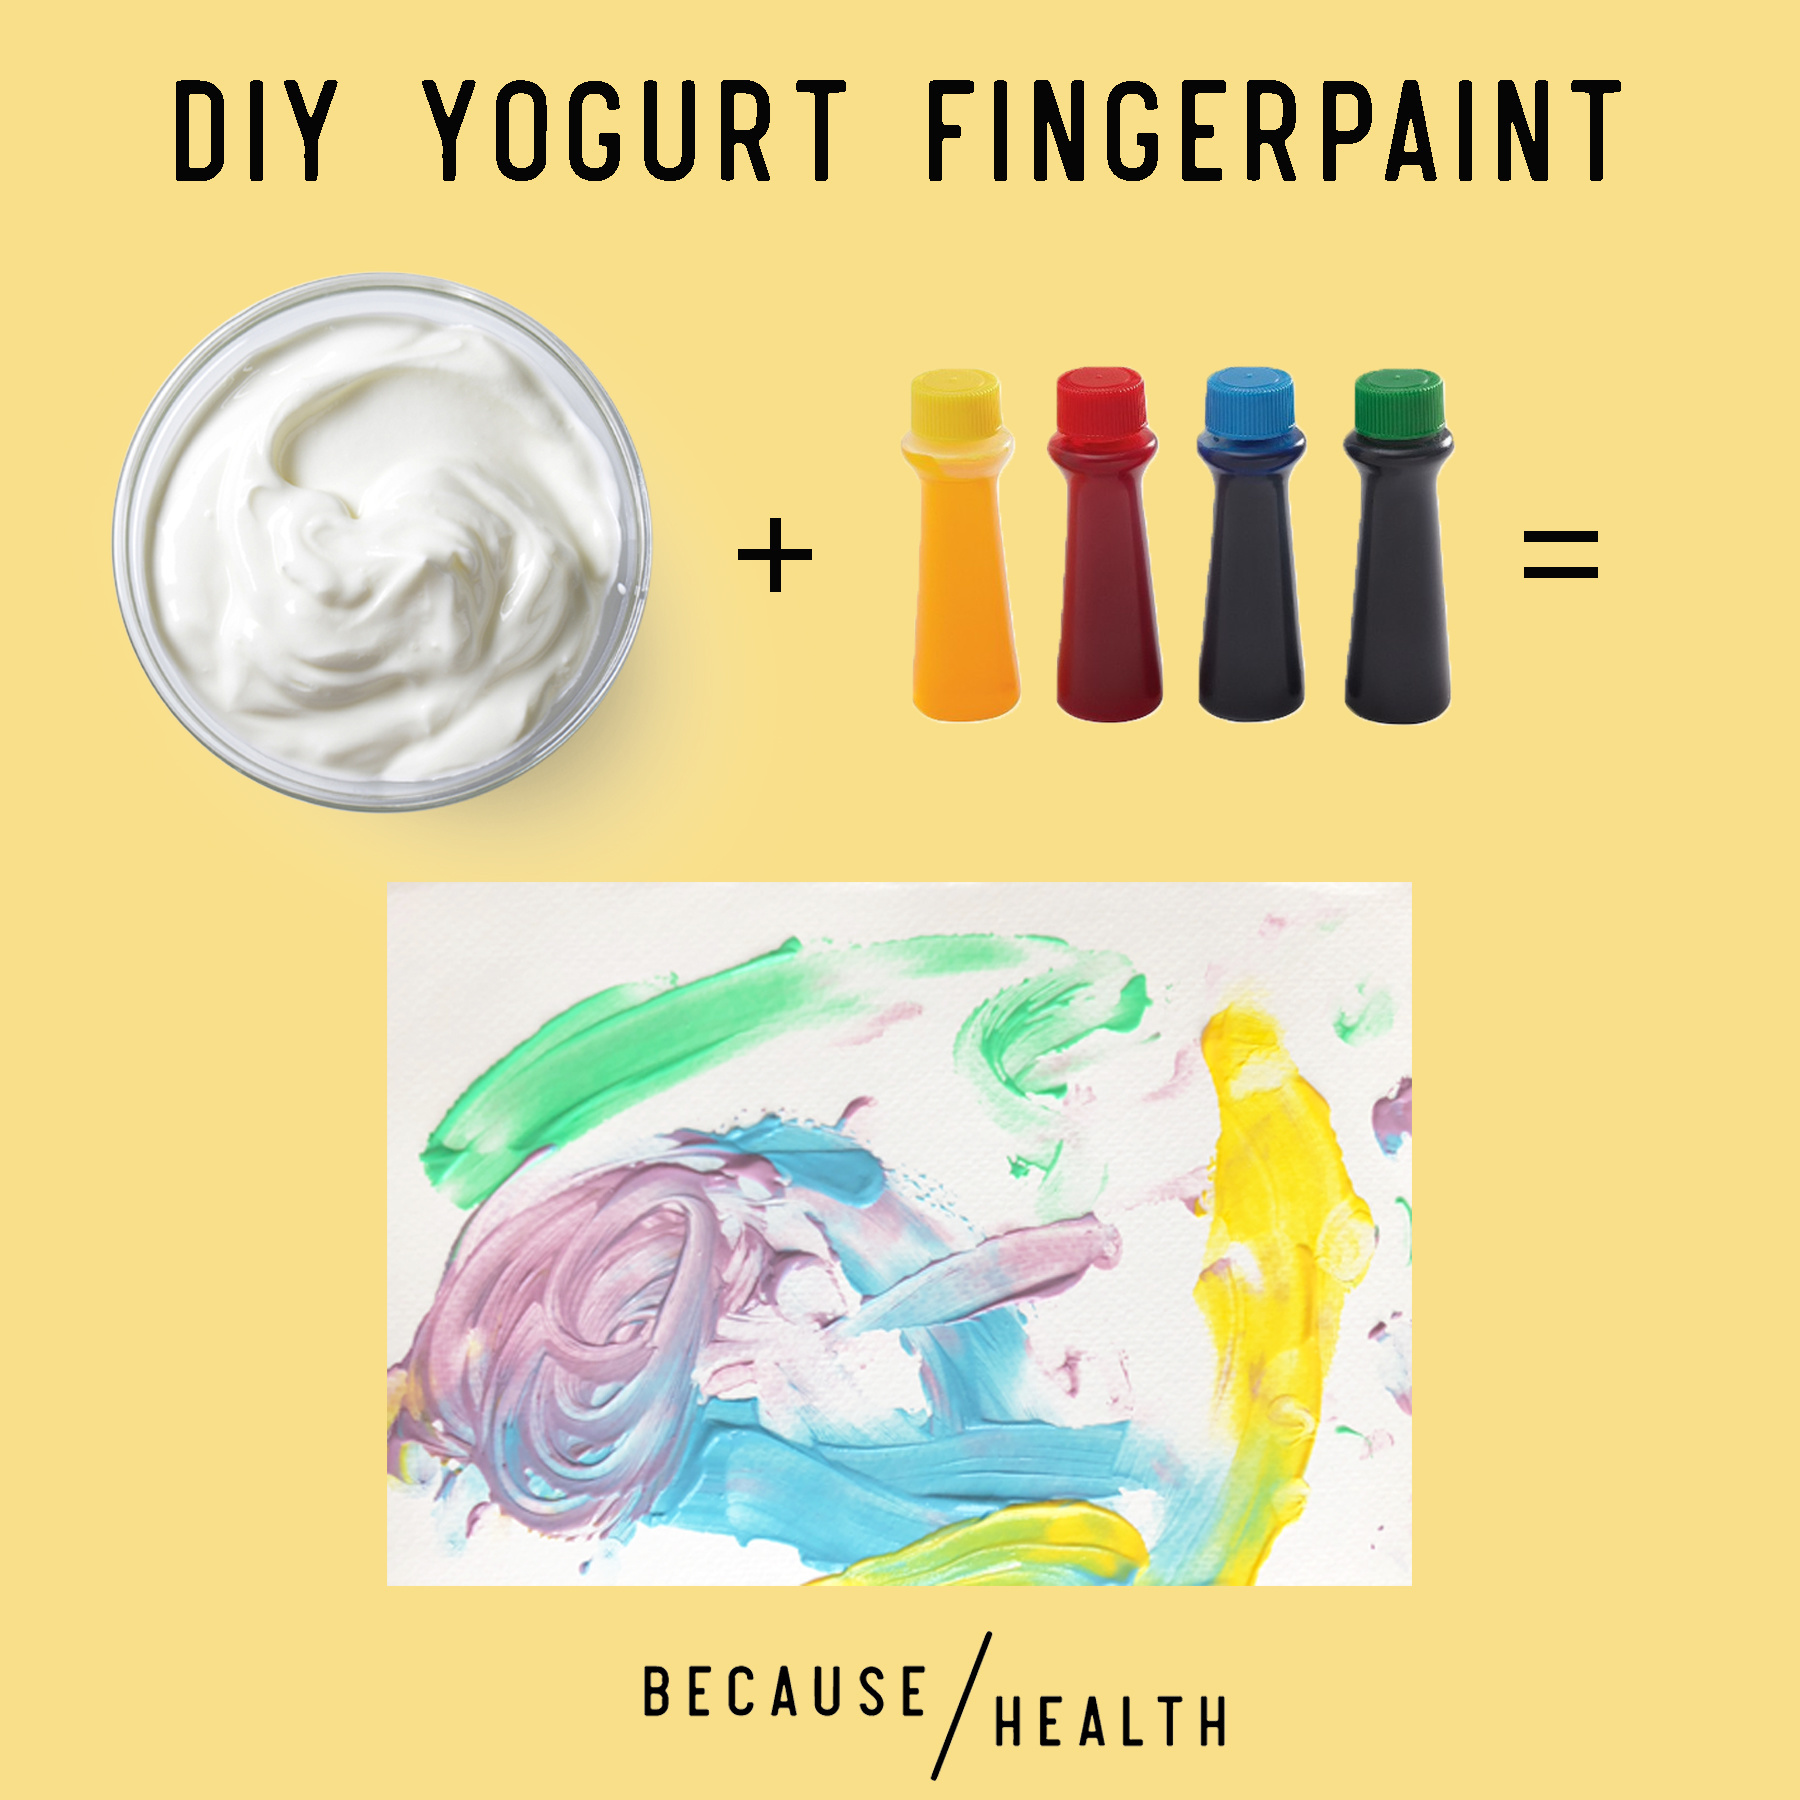 edible yogurt painting for toddlers